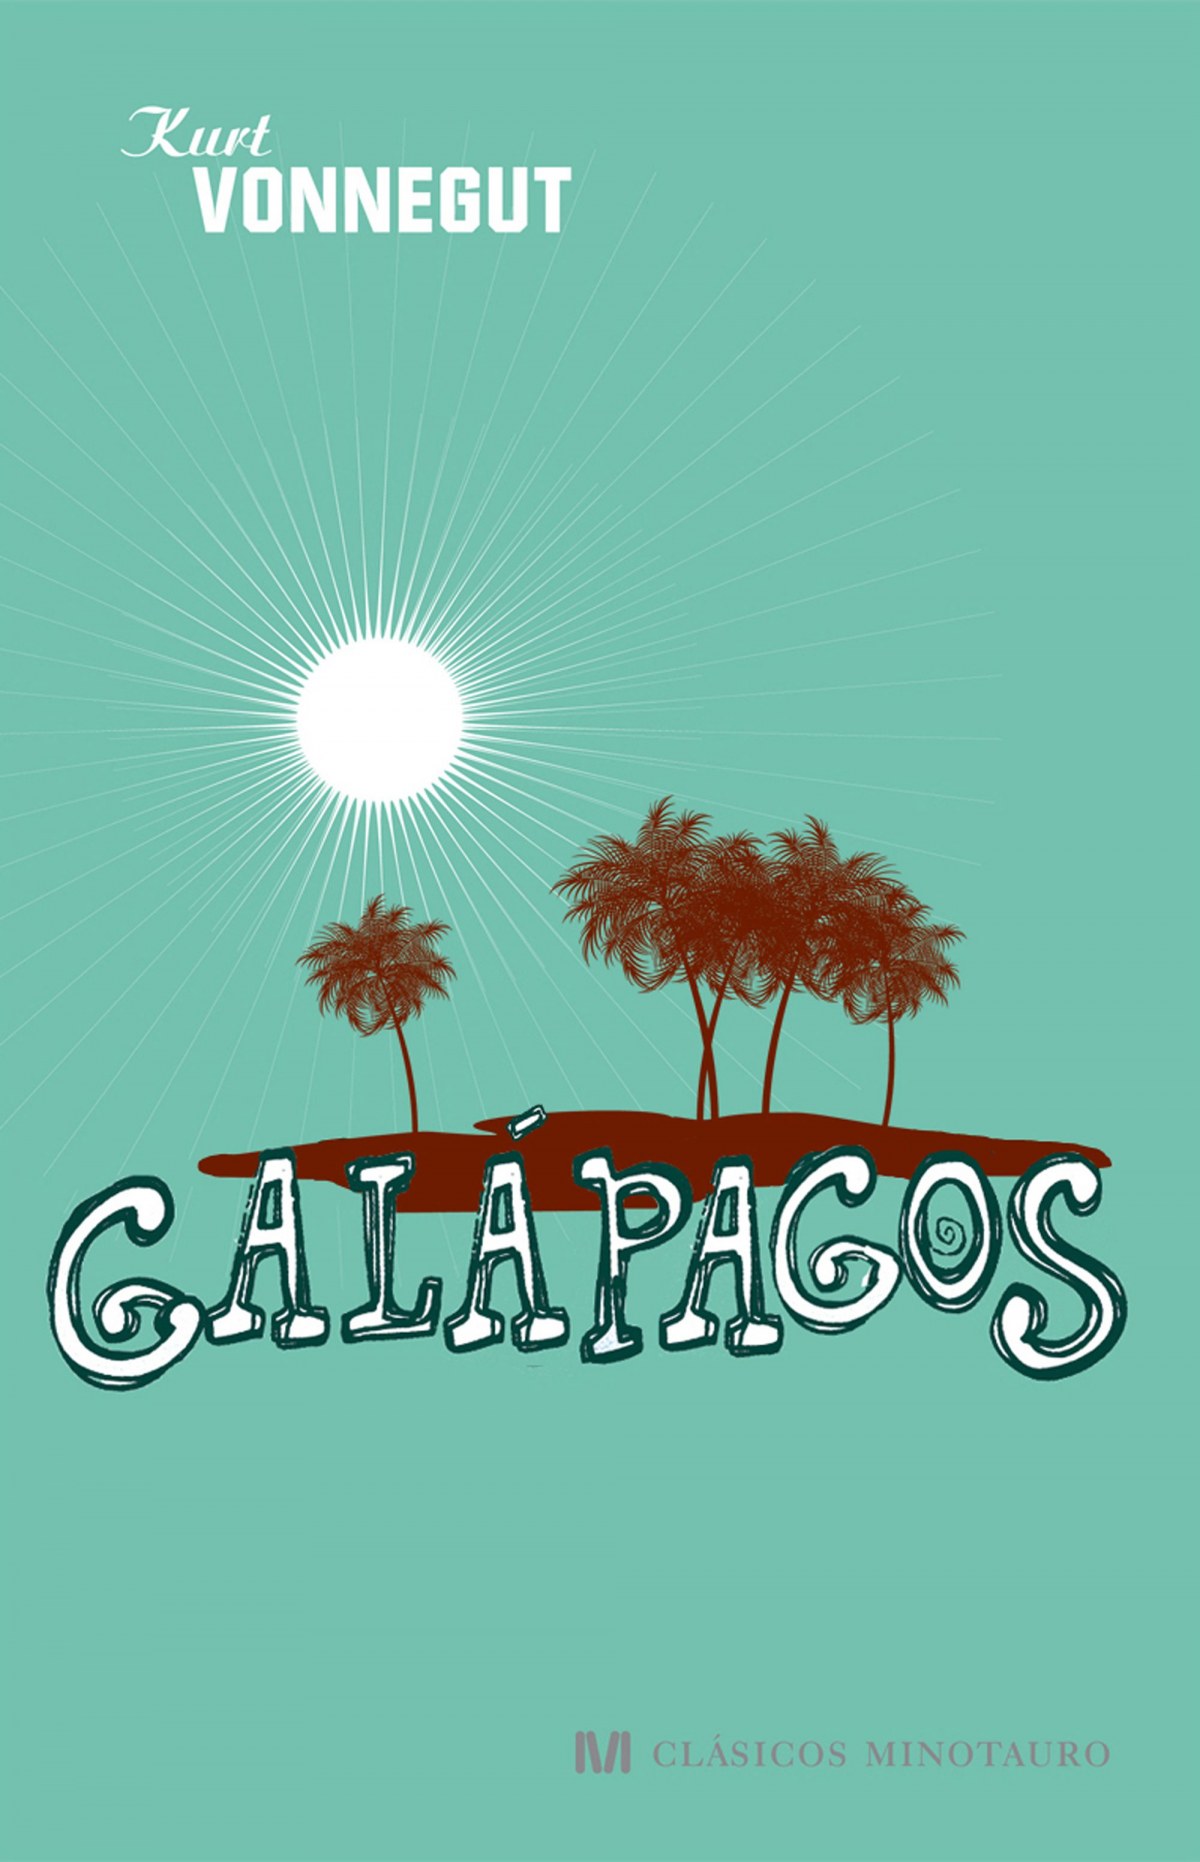 Galapagos - Vonnegut, Kurt